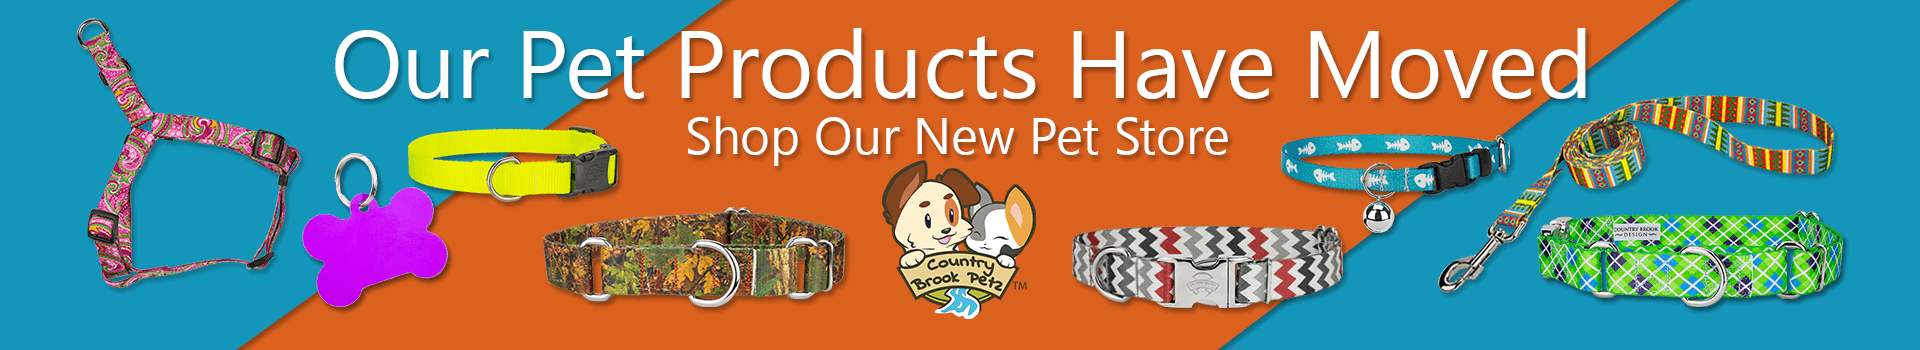 Shop Our New Pet Store!